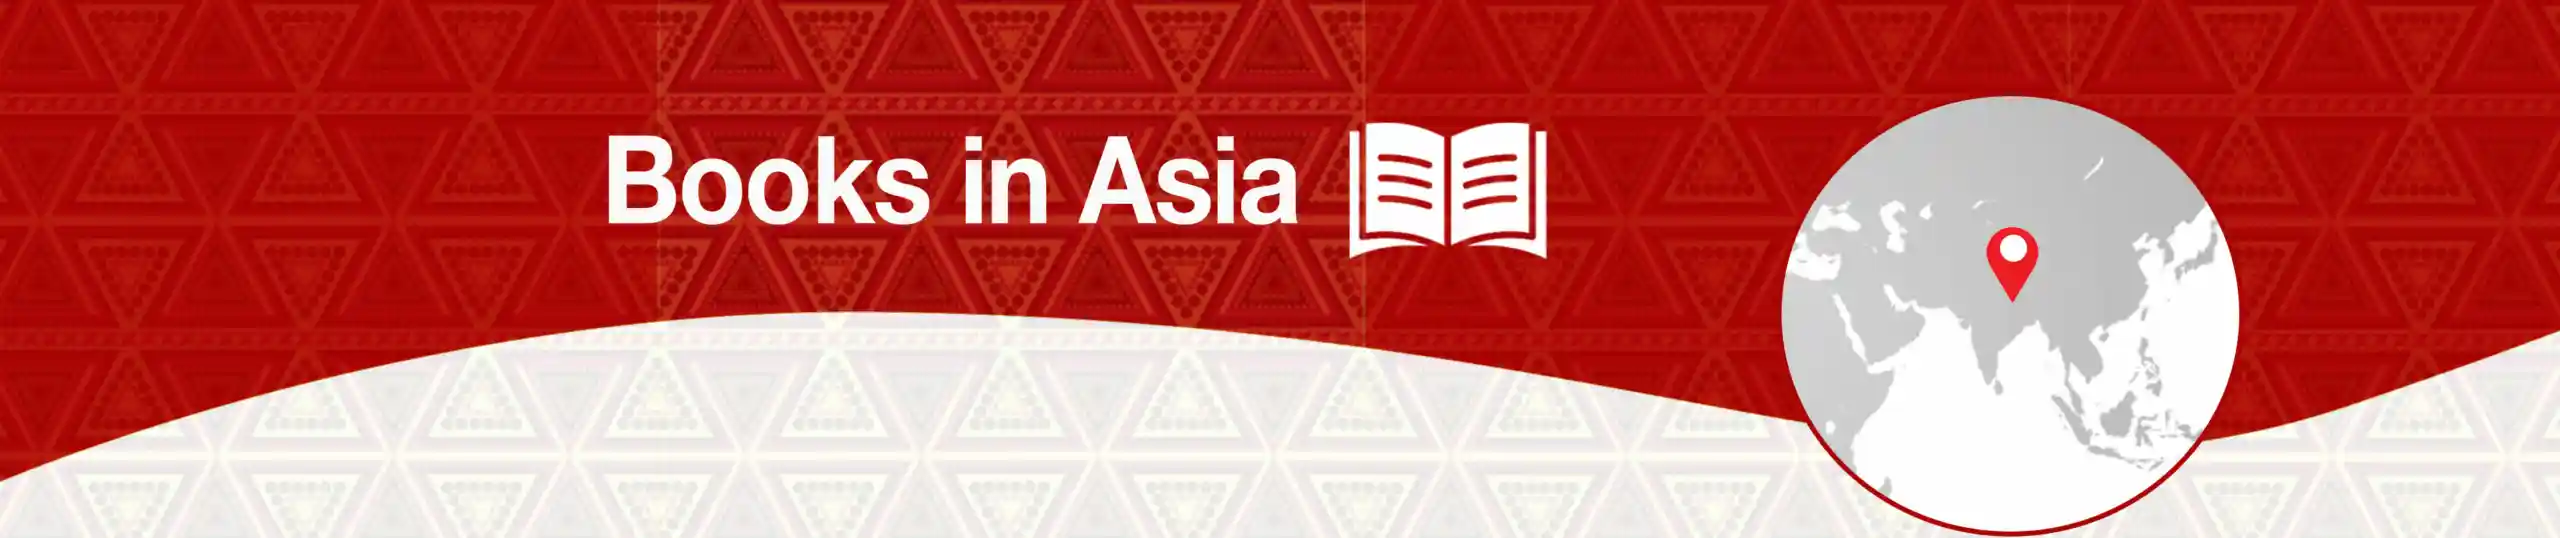 Books in Asia